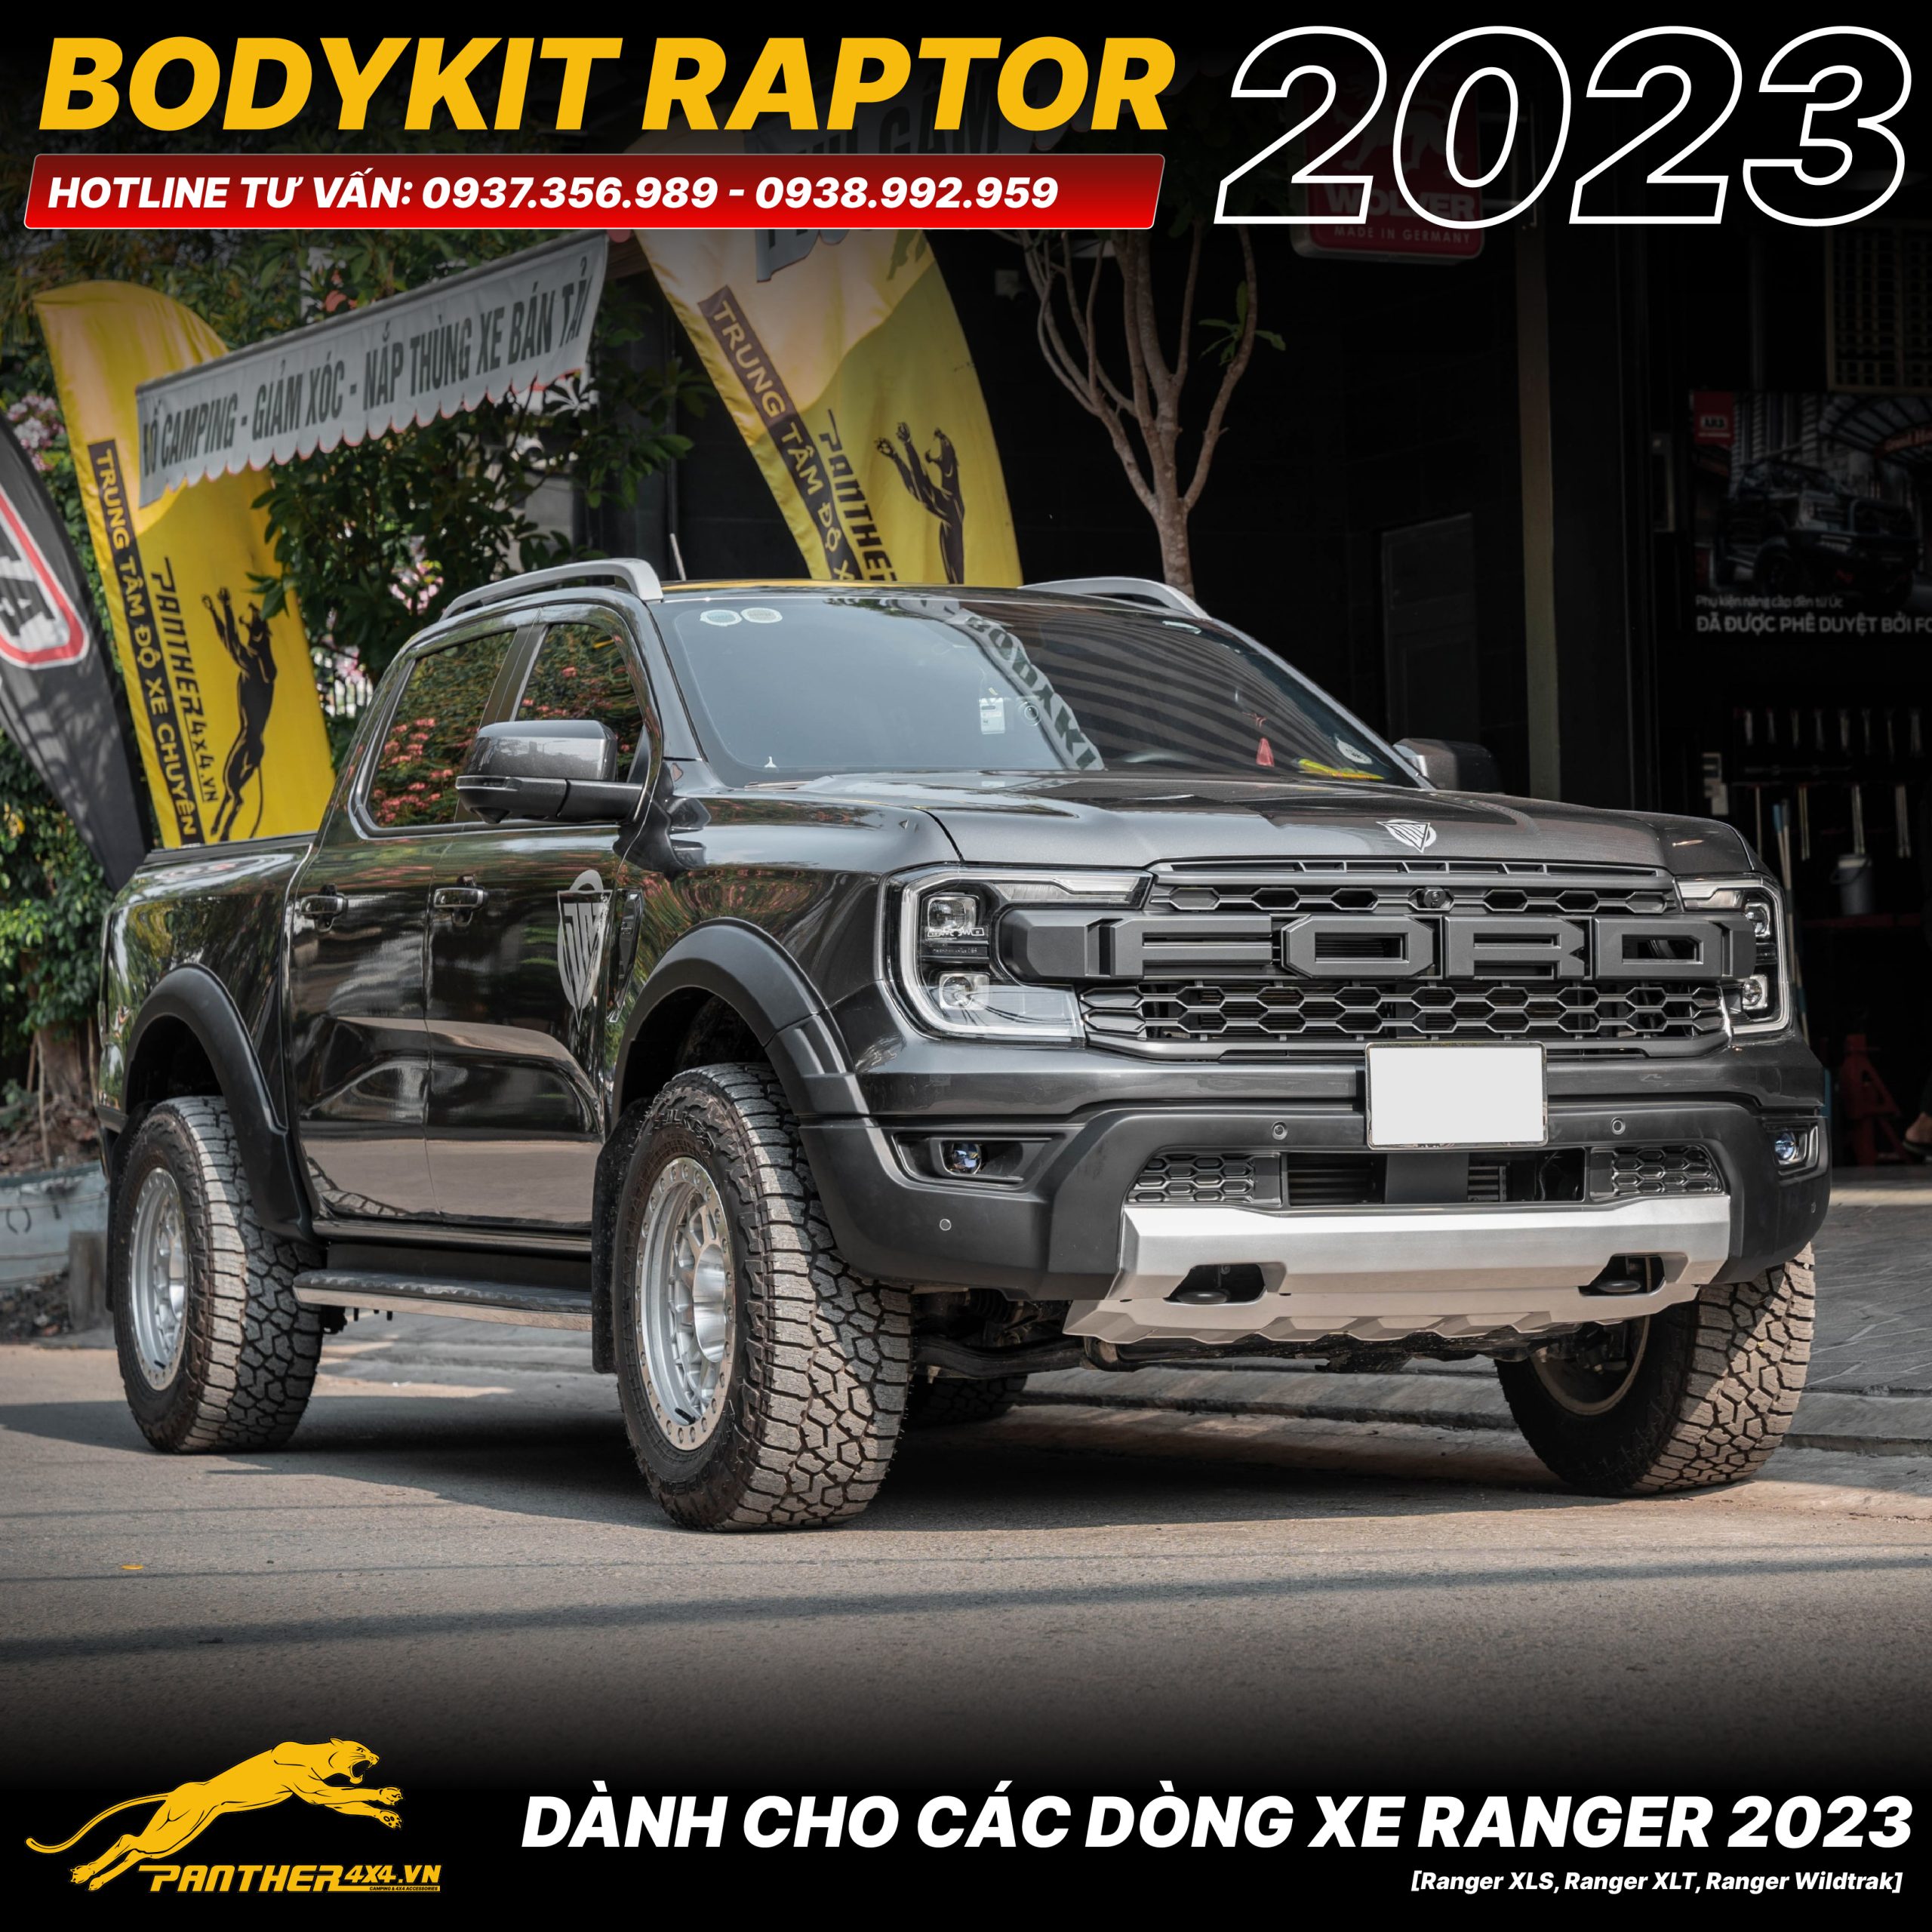 Bodykit Ford Raptor 2023 Next Gen (Ranger Xám)